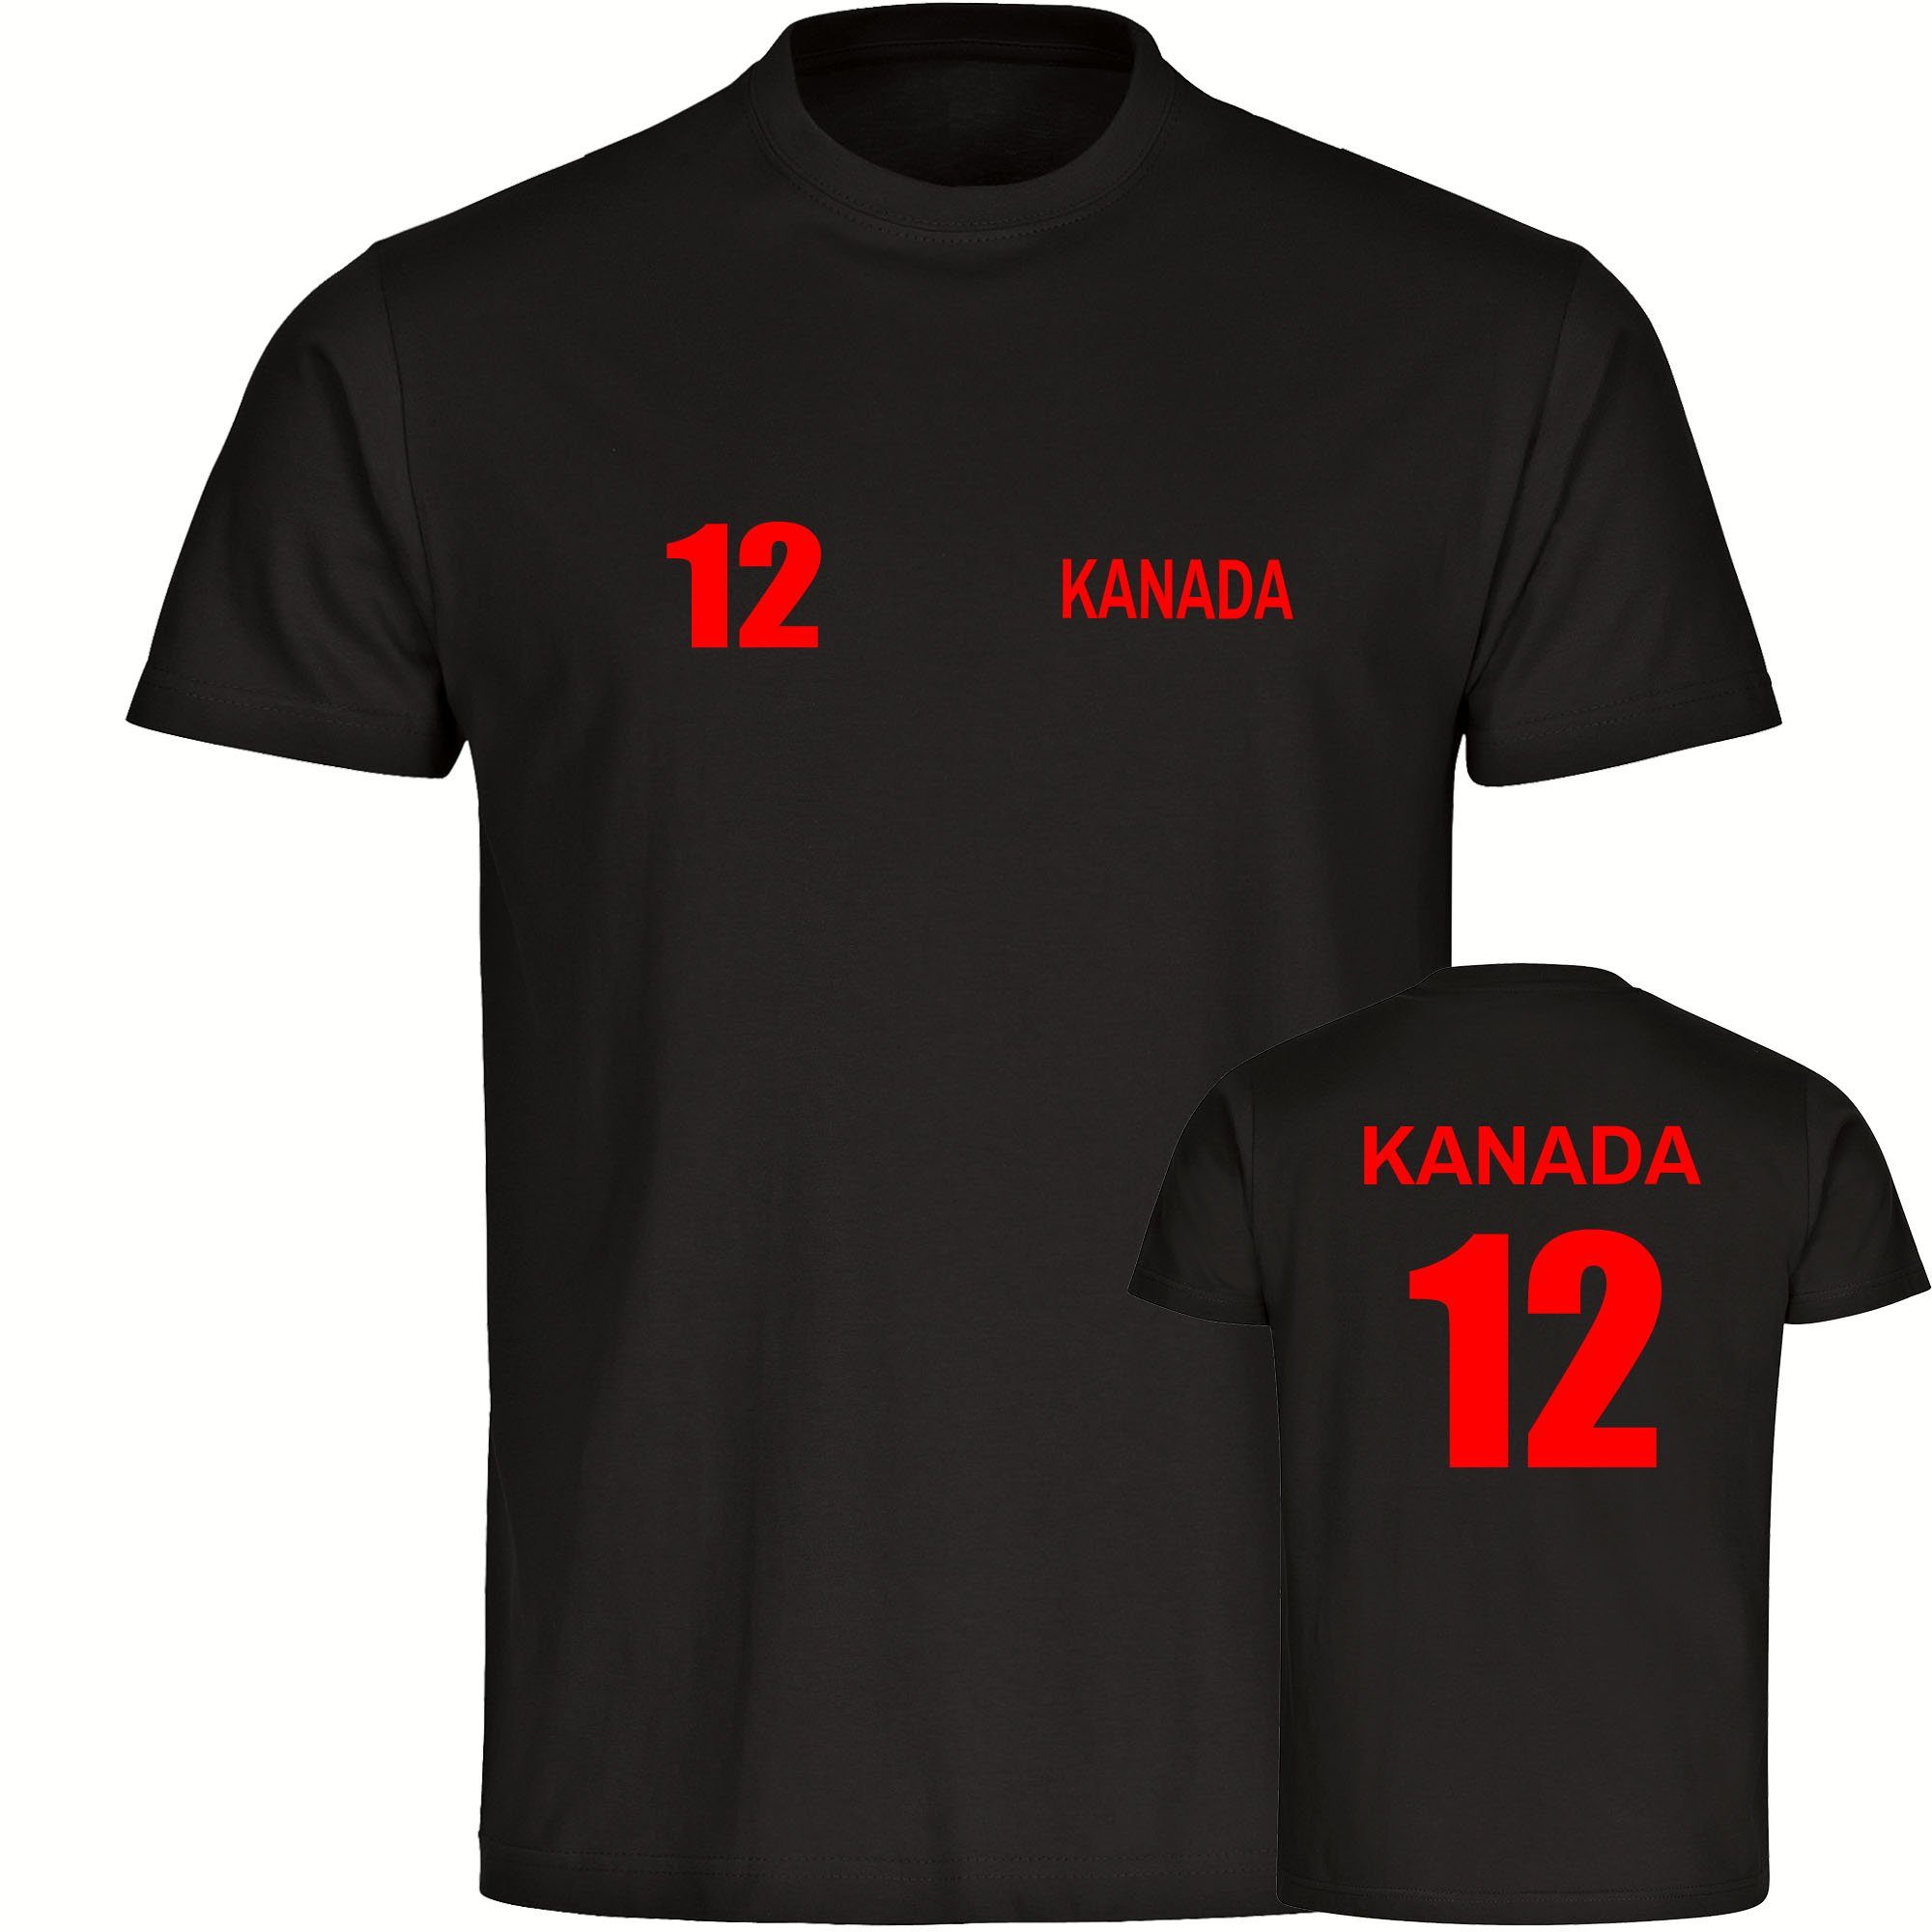 multifanshop T-Shirt Herren Kanada - Trikot 12 - Männer